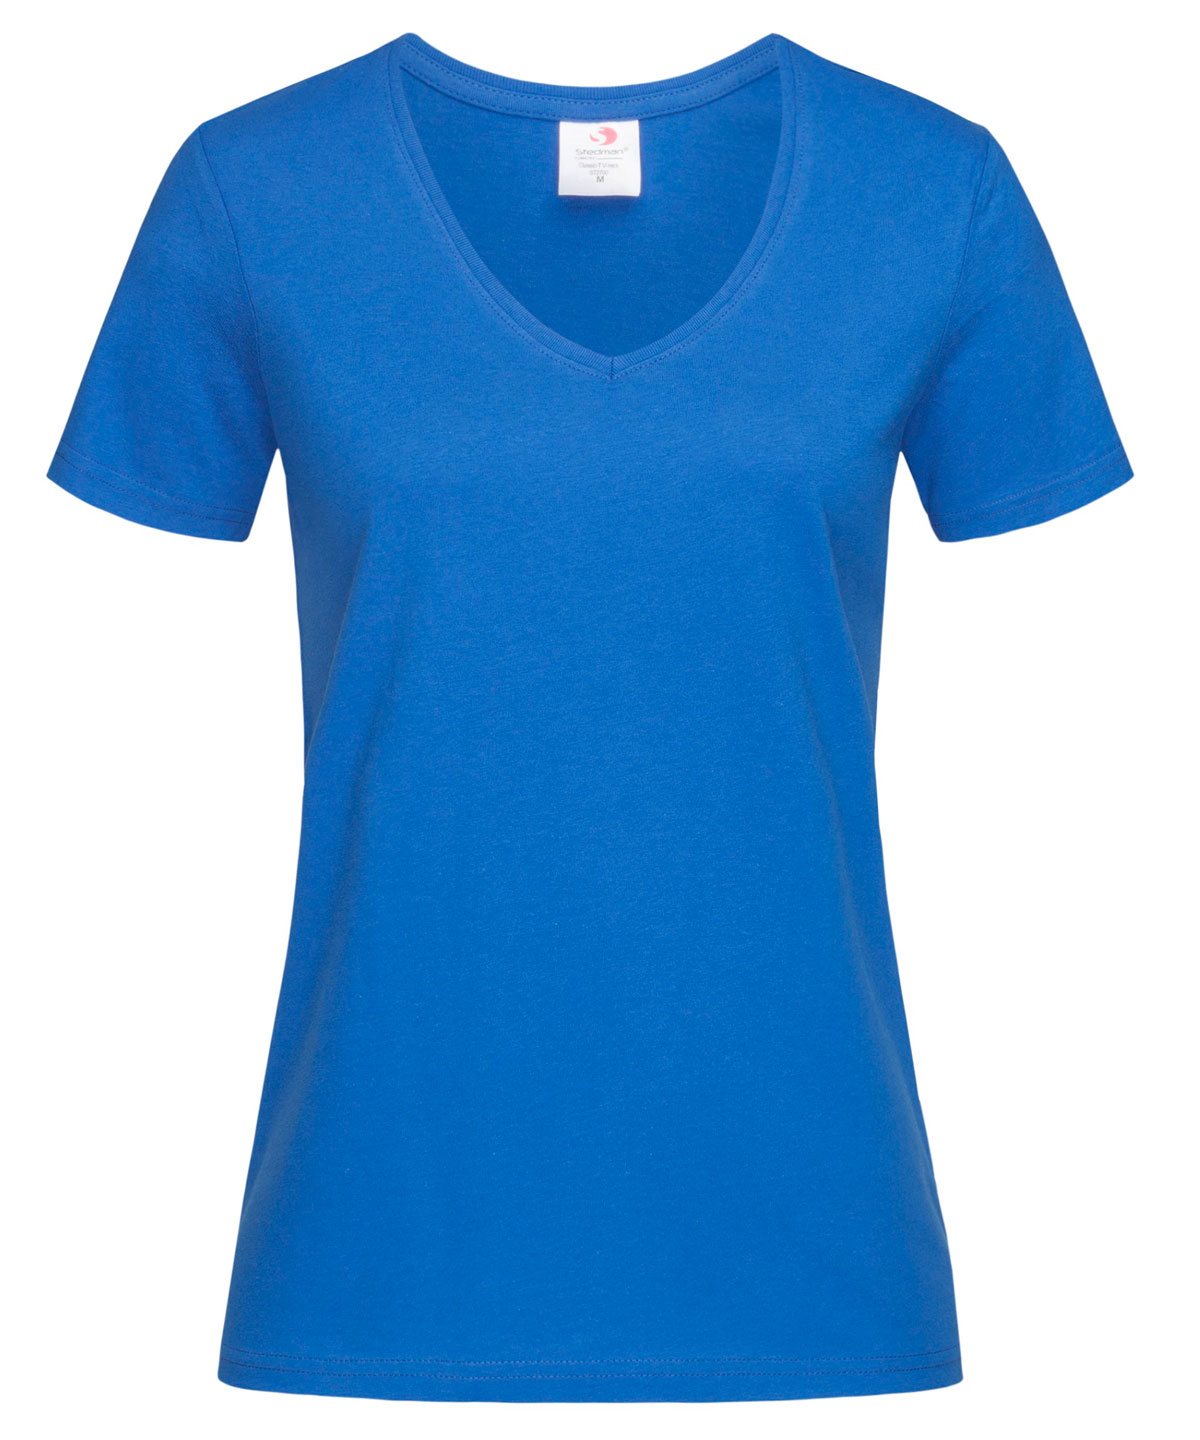 Opmuntring udvande maksimere Custom Printed Stedman Classic V-Neck T-Shirt For Women | Brandum